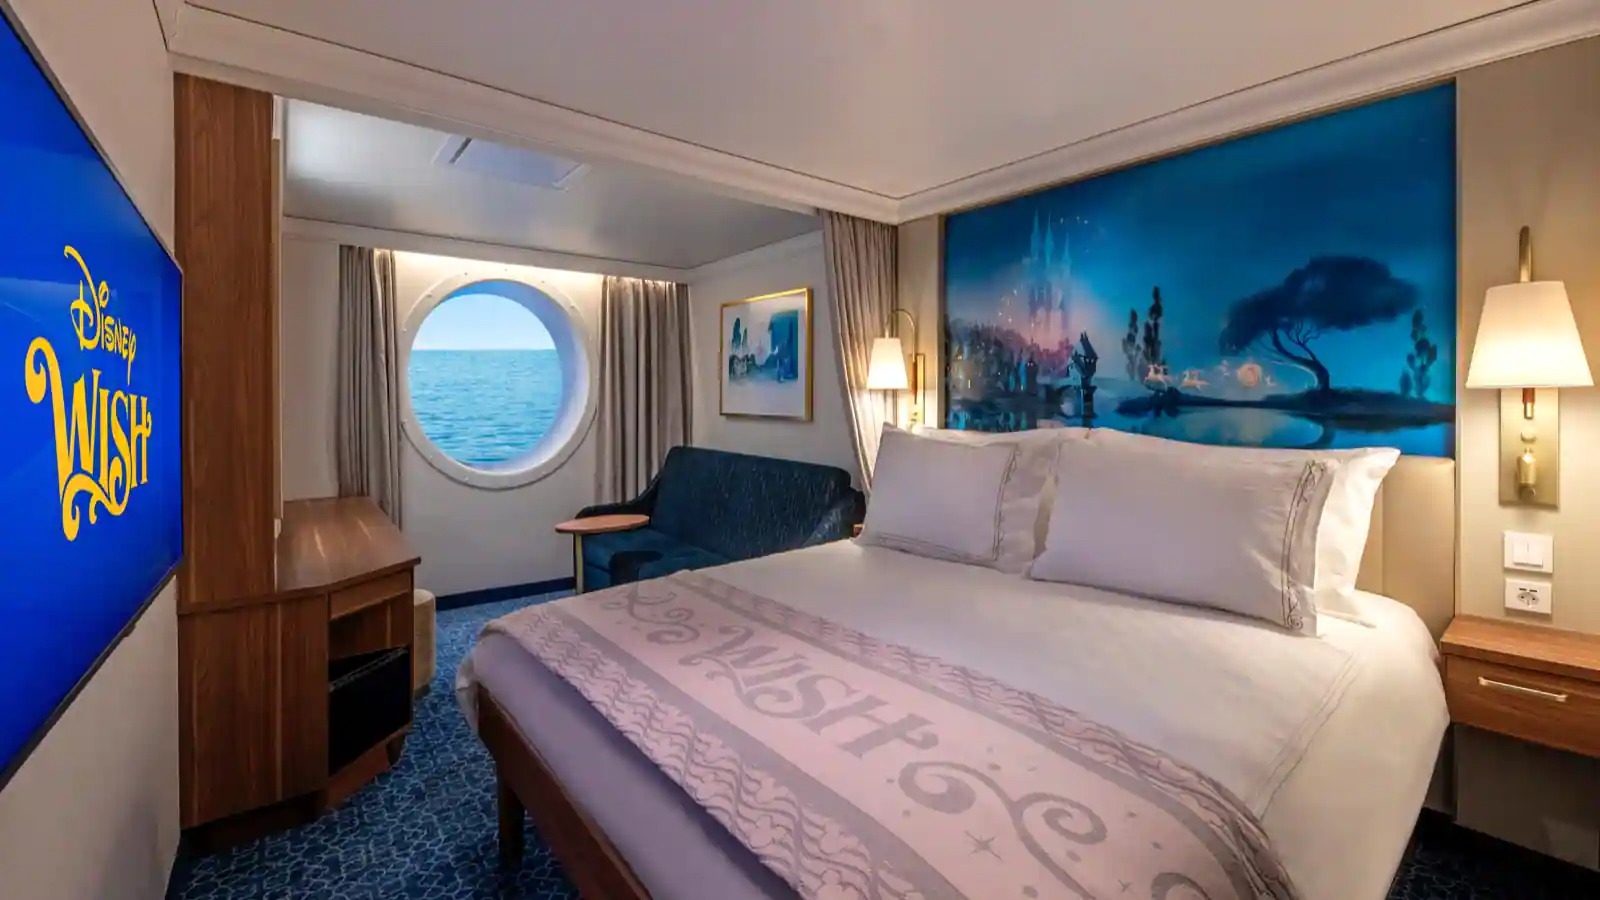 Disney Wish oceanview stateroom